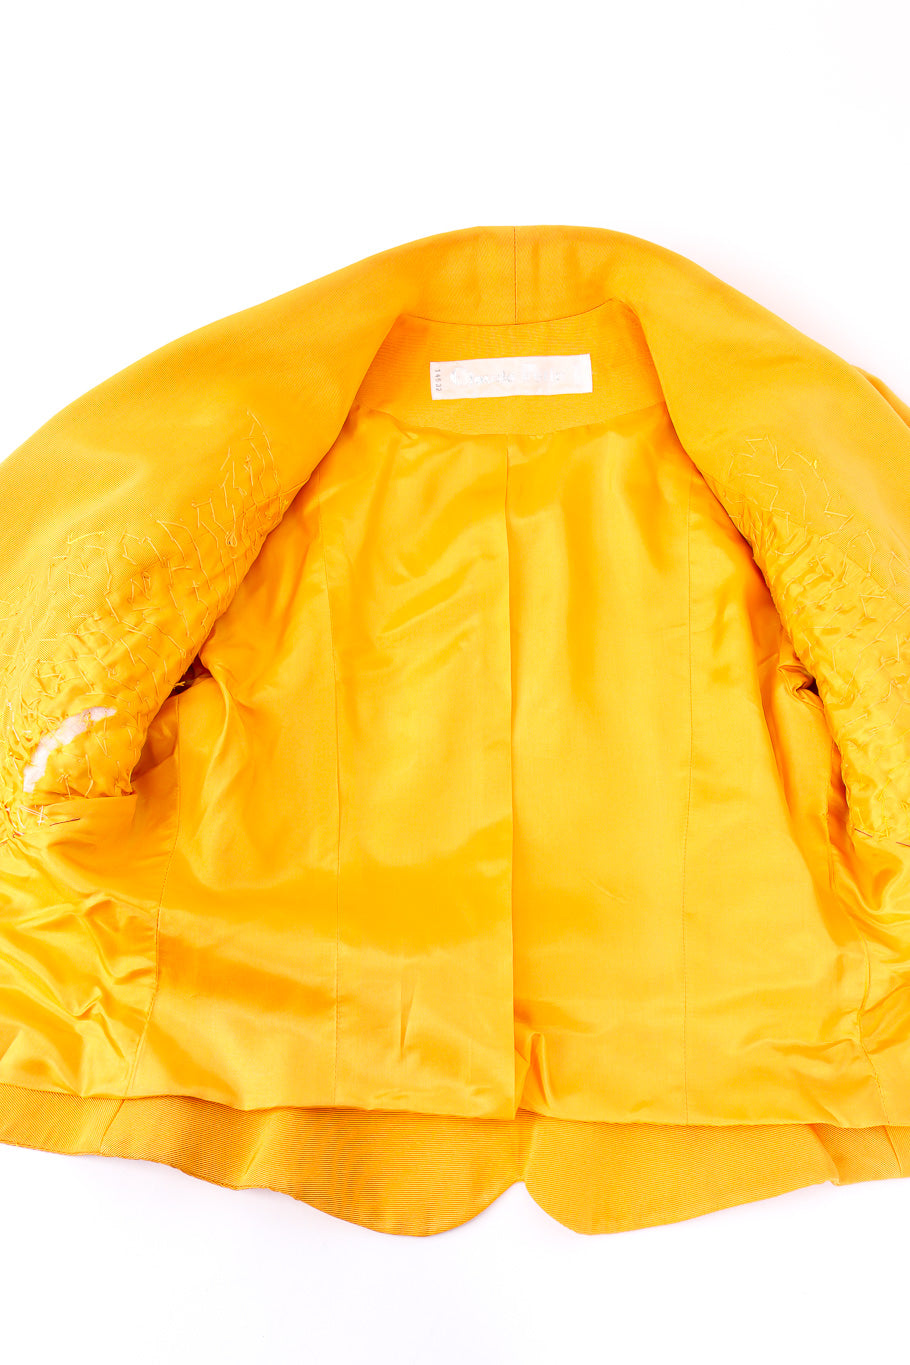 Embellished jacket top by Claude Pétin lining @recessla